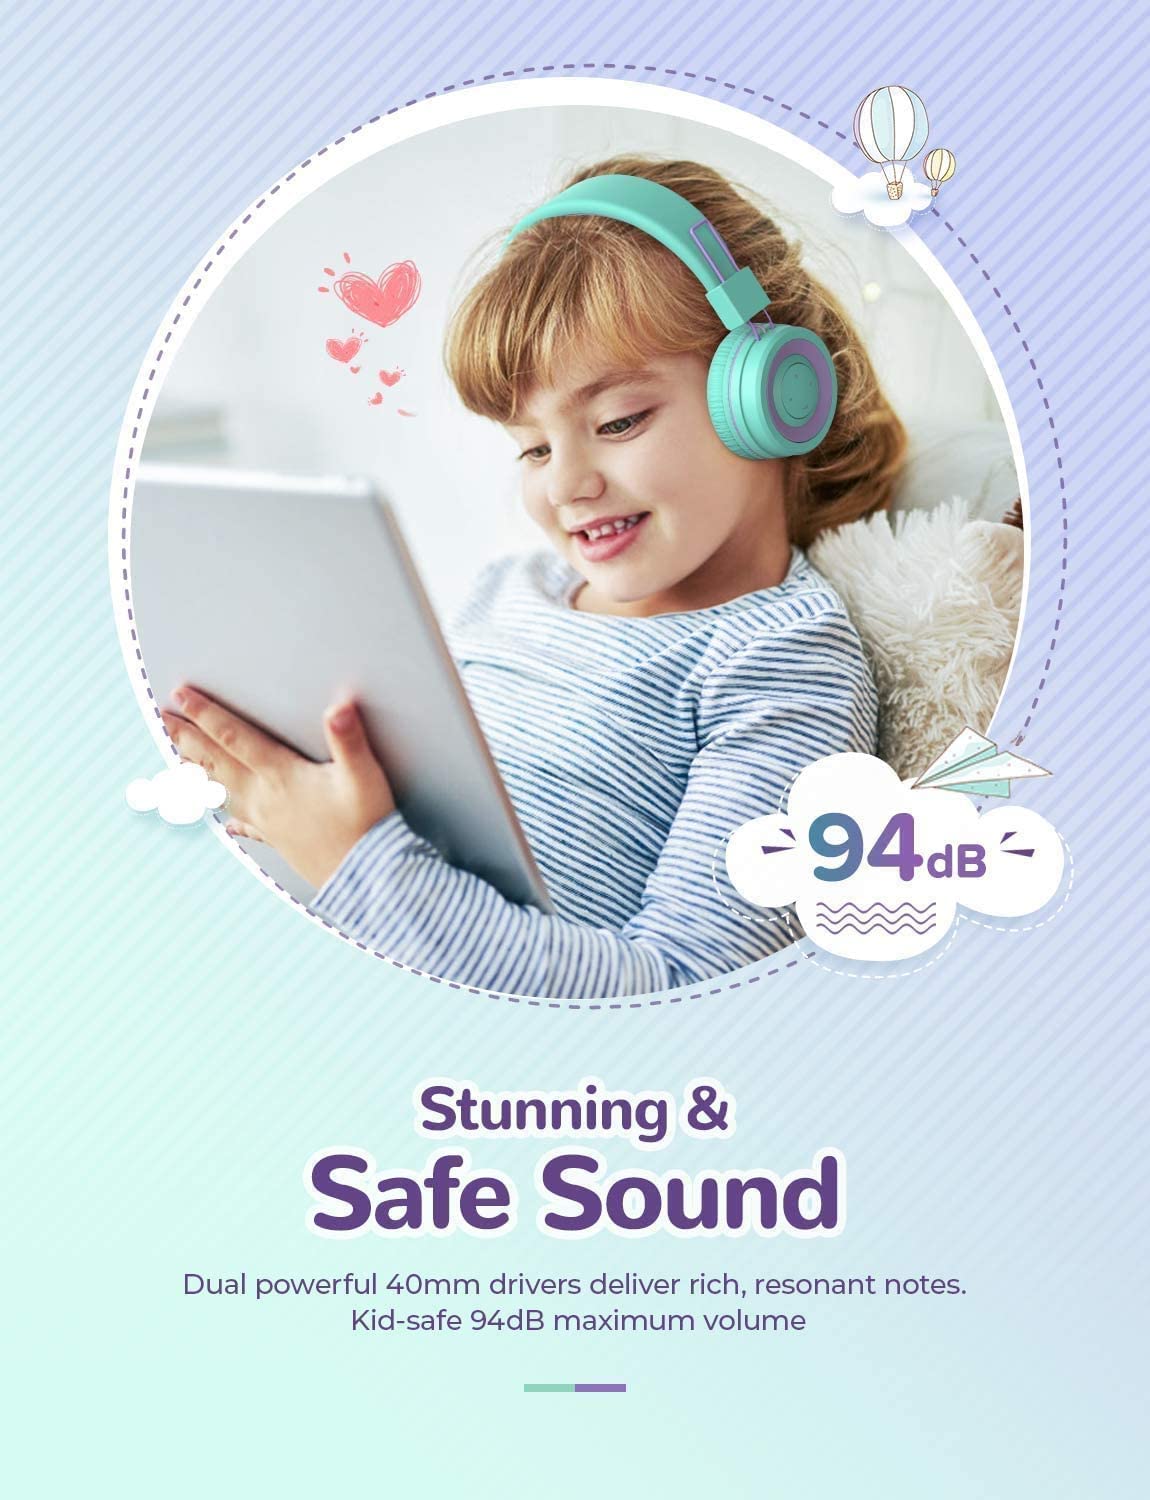 Casque audio microphone Bluetooth RGB BTH03 - iclever - pour Enfant - Neuf